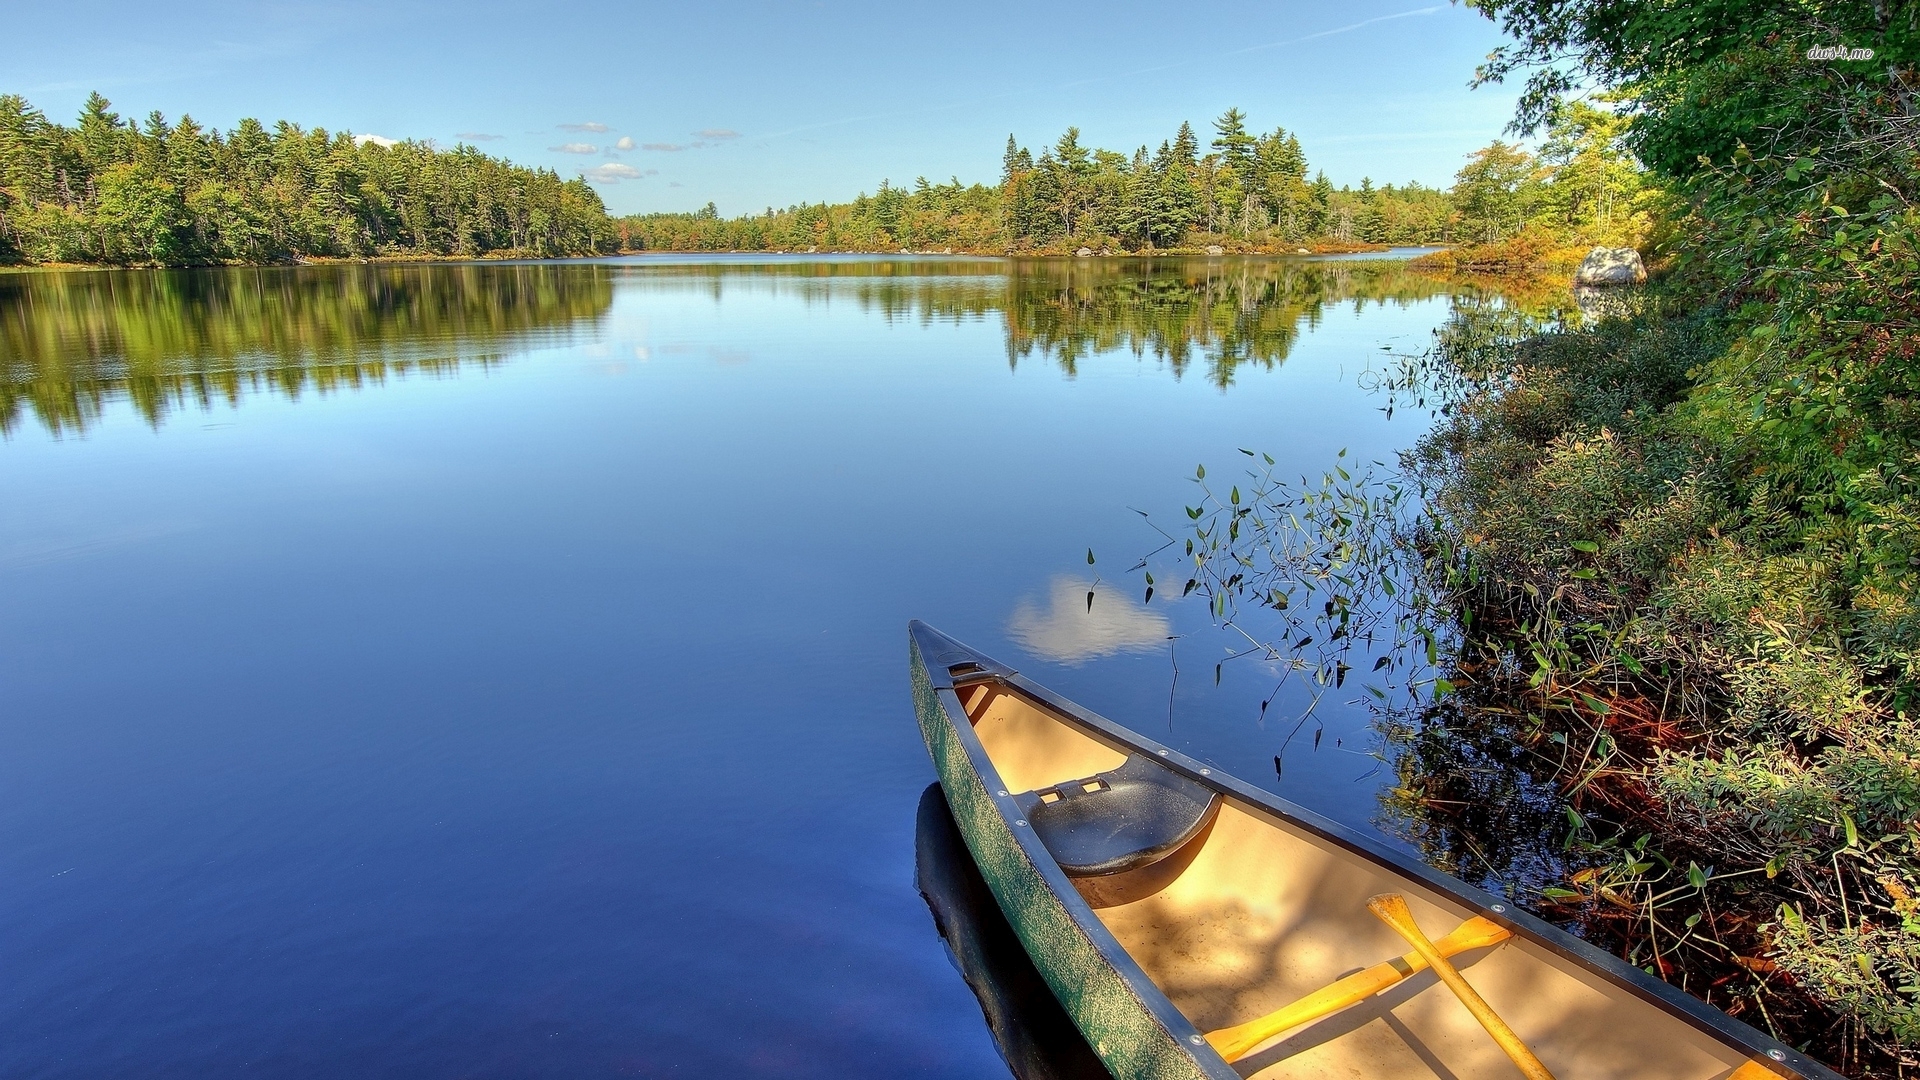 Canoe on a peaceful lake surrounded